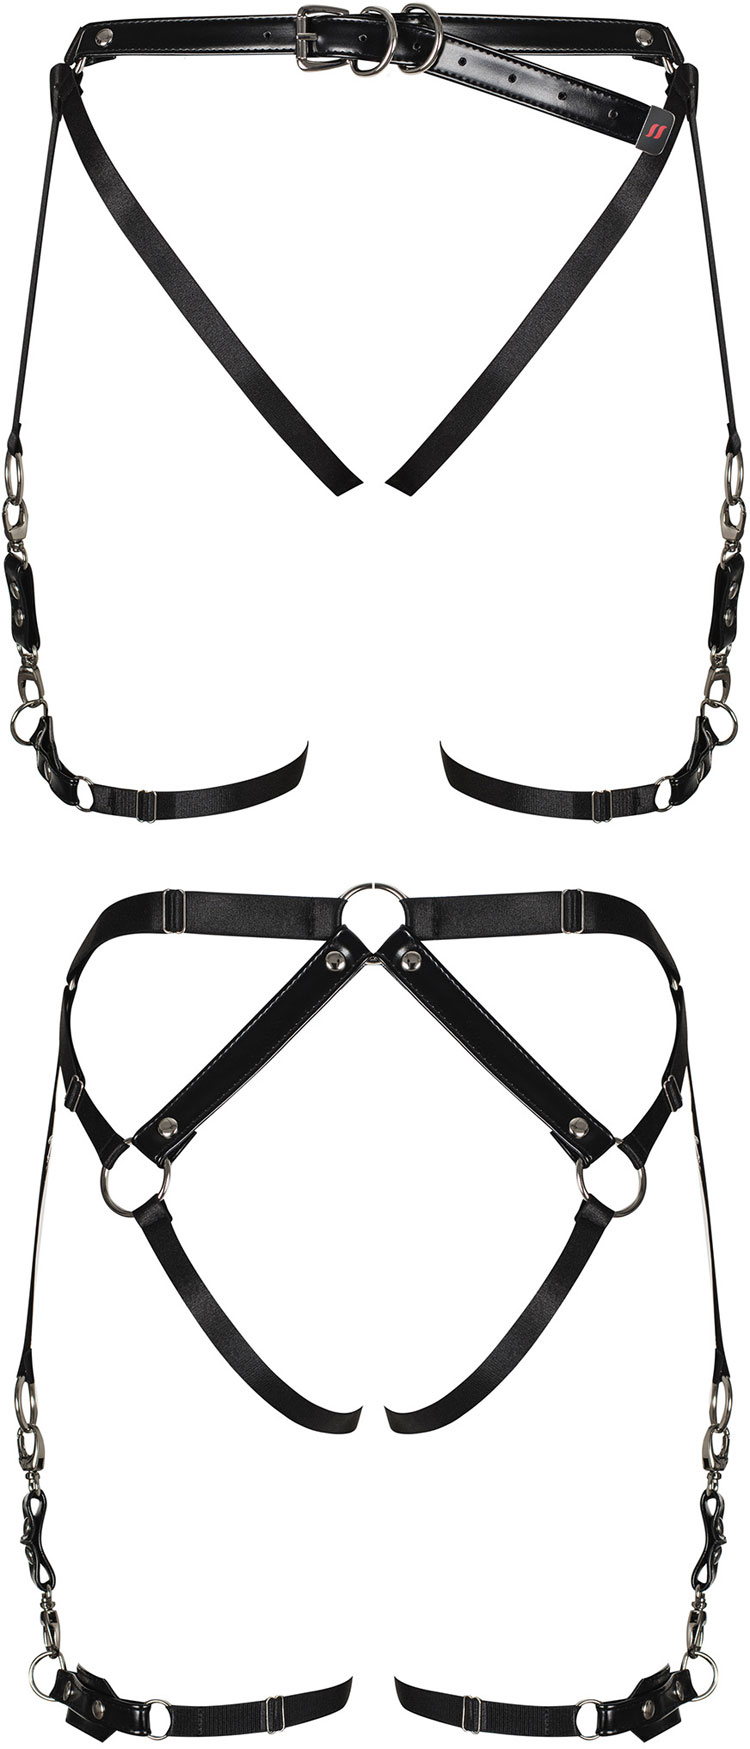 Uprząż damska A762 harness